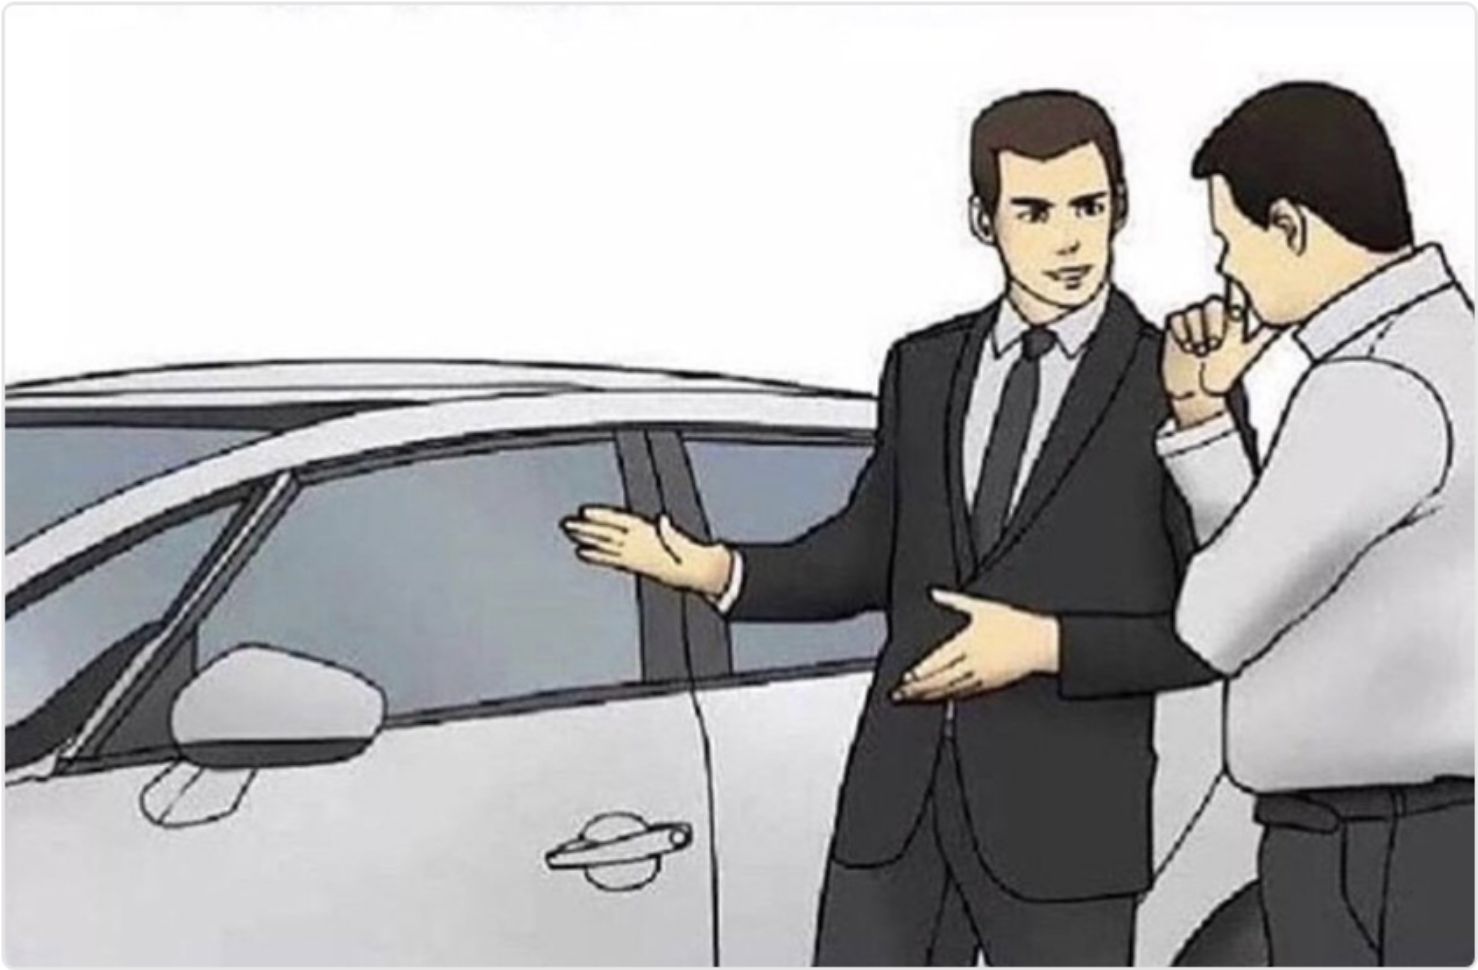 High Quality Car Salesman Blank Meme Template